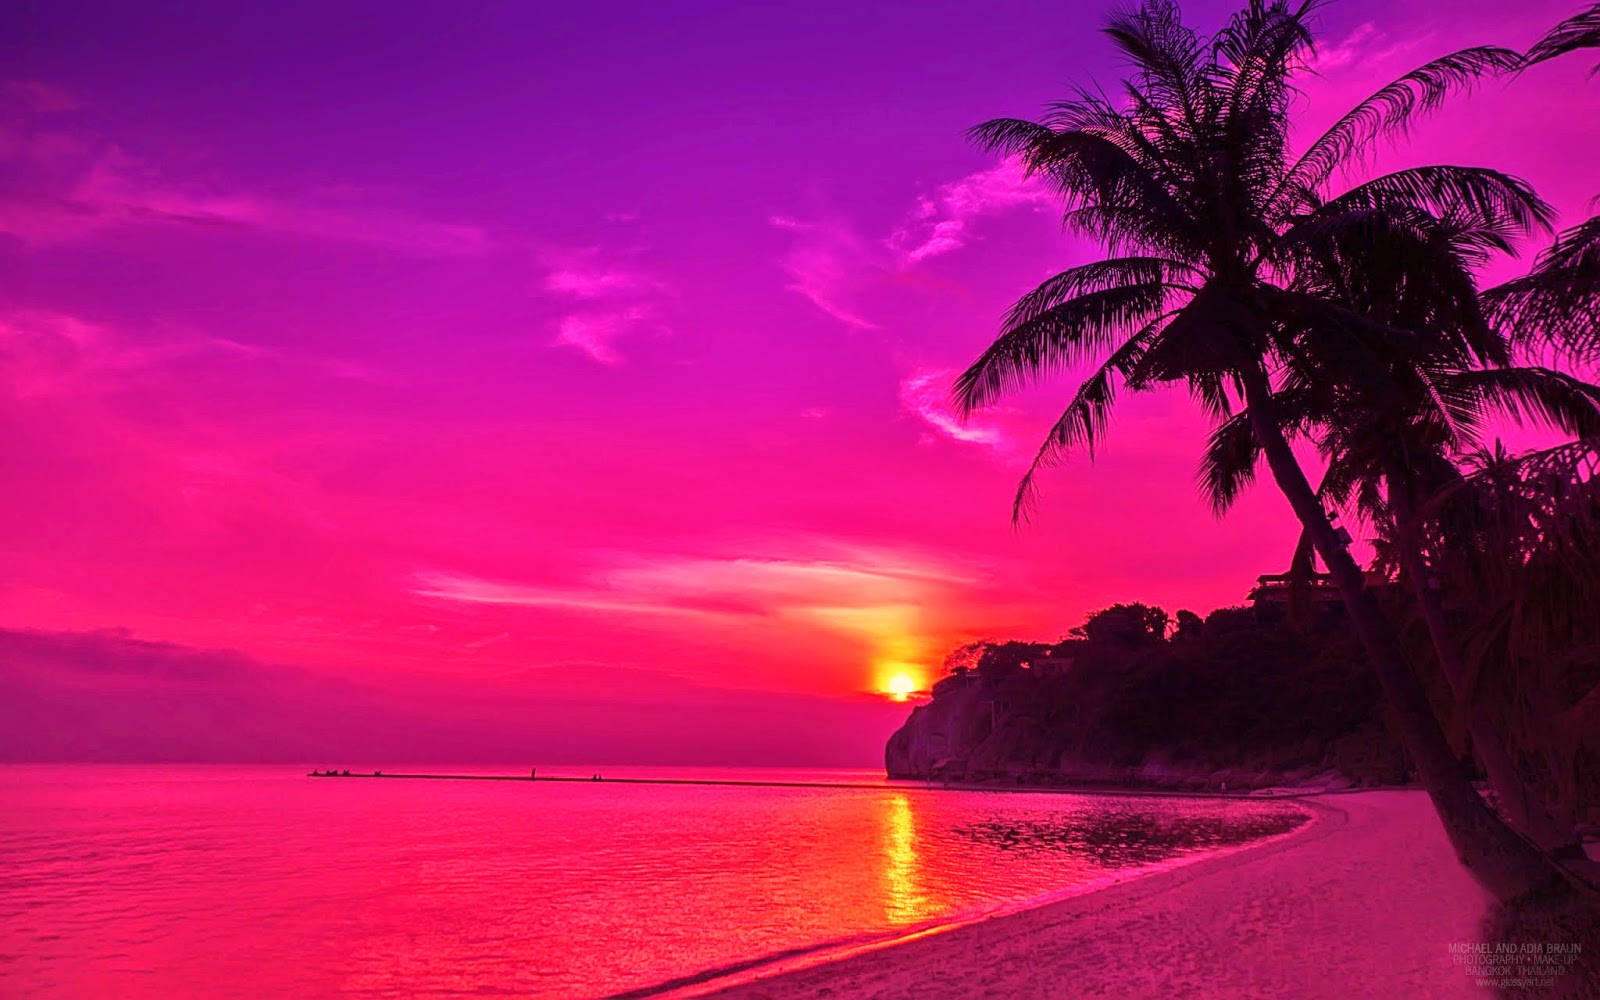 Schaudir Den Wunderschönen Rosa Sonnenuntergang Auf Diesem Perfekten Iphone Hintergrundbild An. Wallpaper